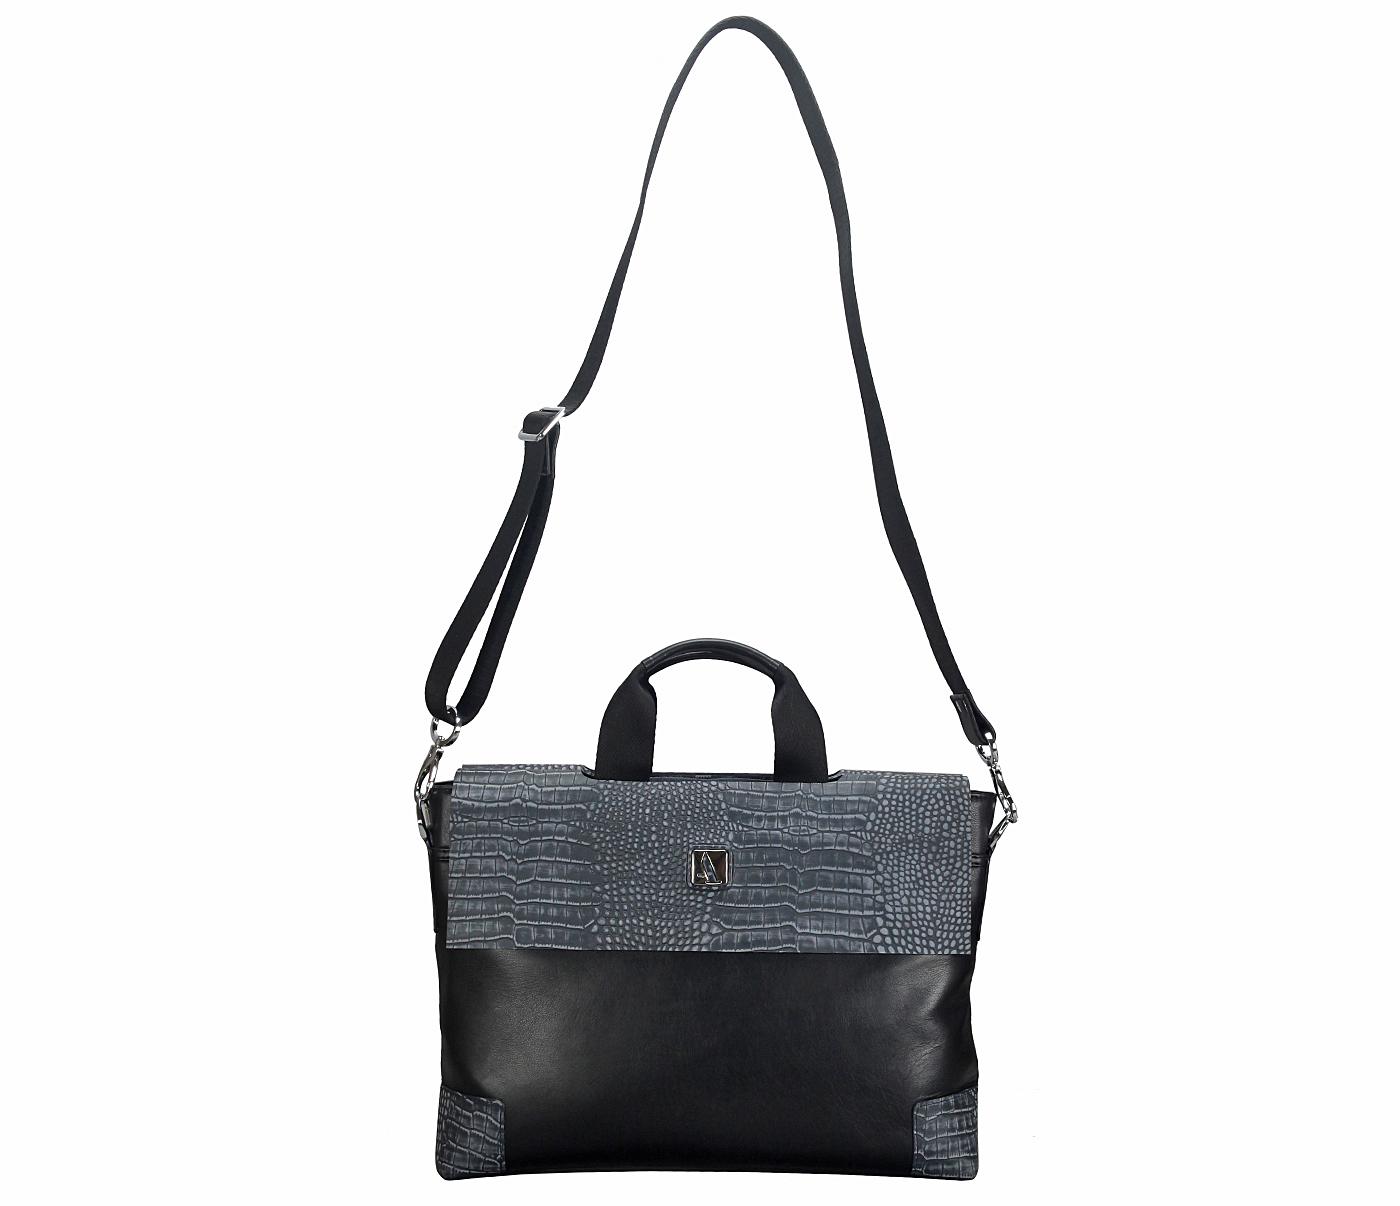 Portfolio / Laptop Bag-Ebner-Laptop And Portfolio Office Executive Bag In Genuine Leather - Black/Blue